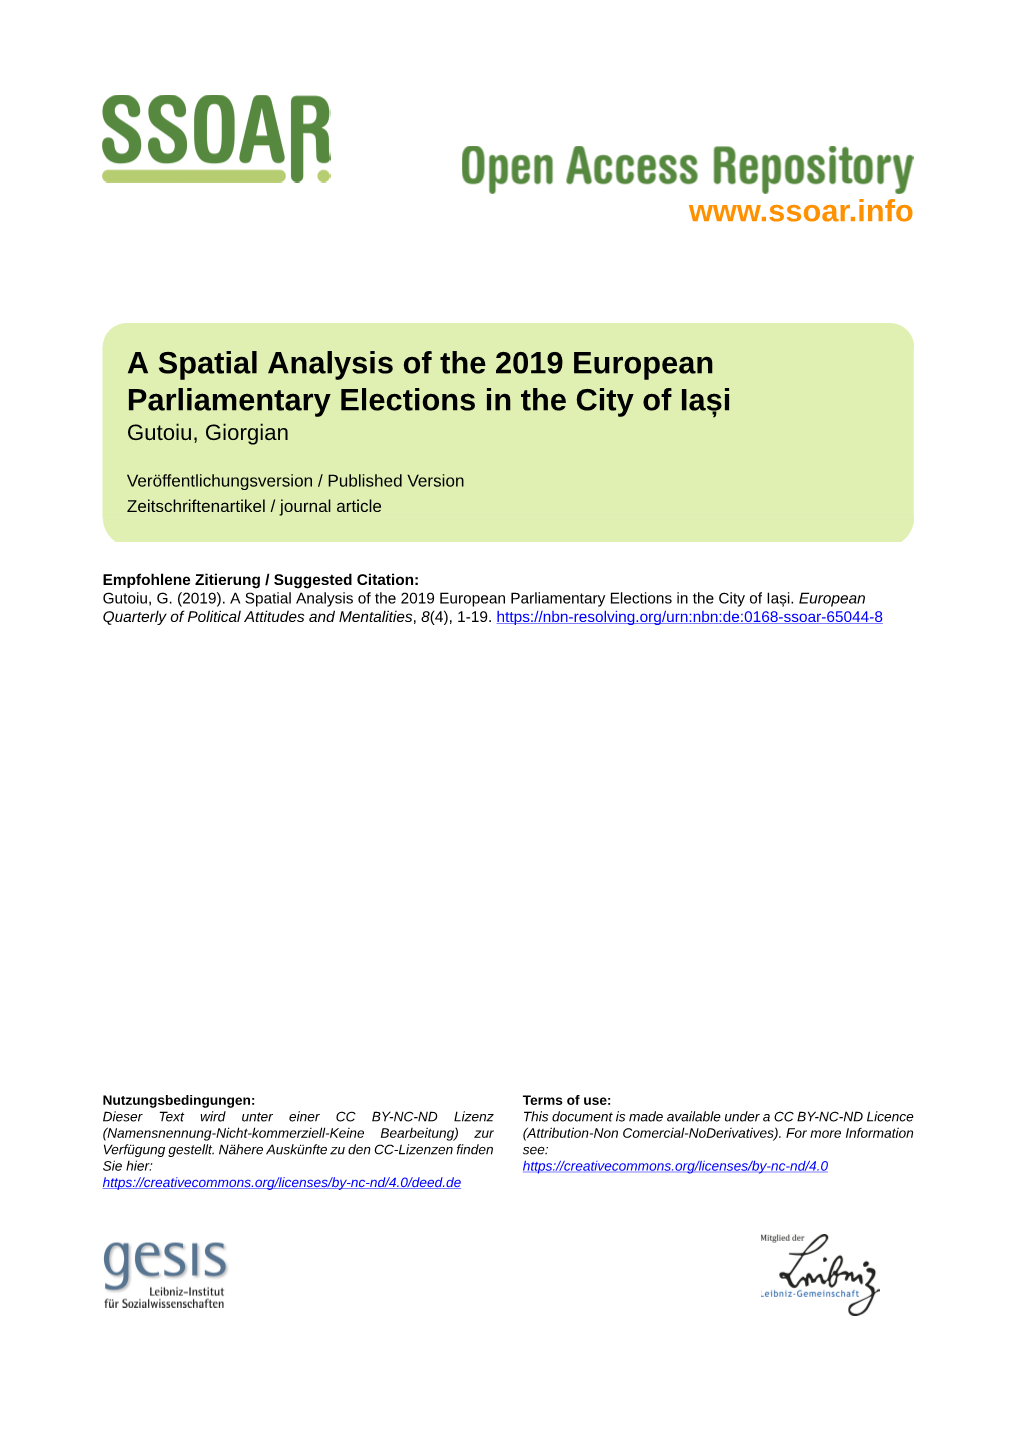 A Spatial Analysis of the 2019 European Parliamentary Elections in the City of Iași Gutoiu, Giorgian